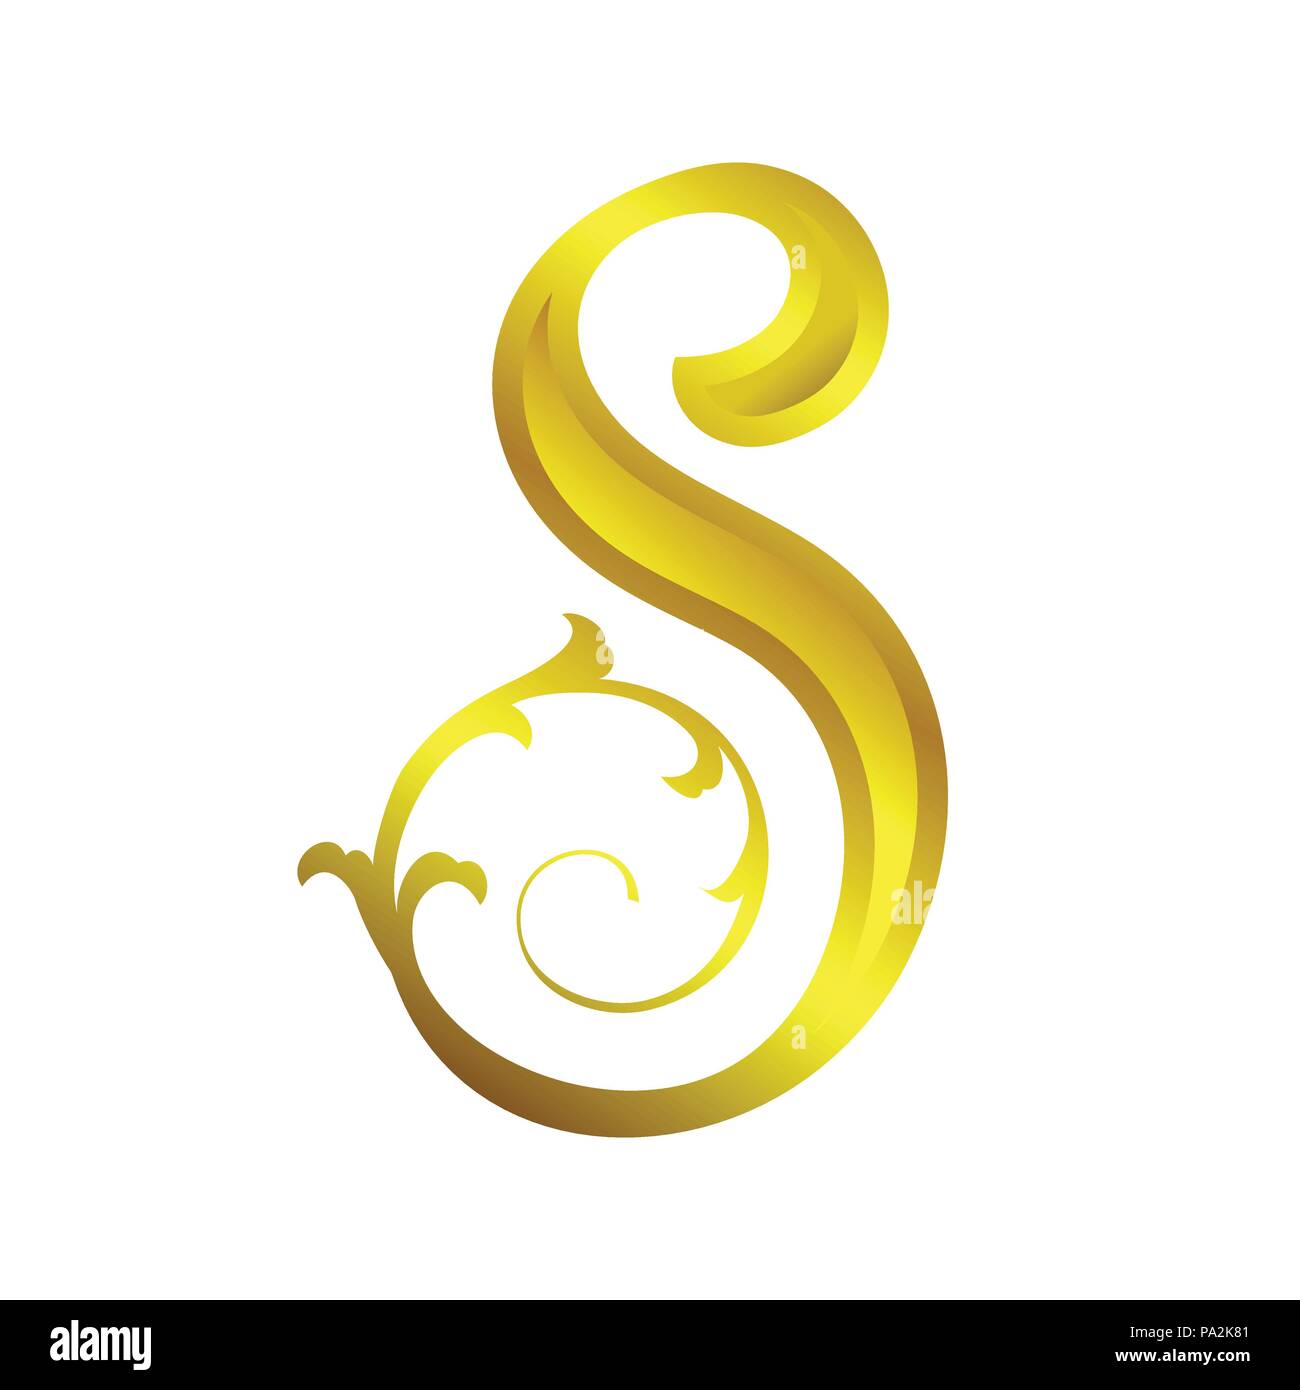 Initial S Lettermark Golden Floral Ornamental Vector Symbol Graphic Logo Design Template Stock Vector